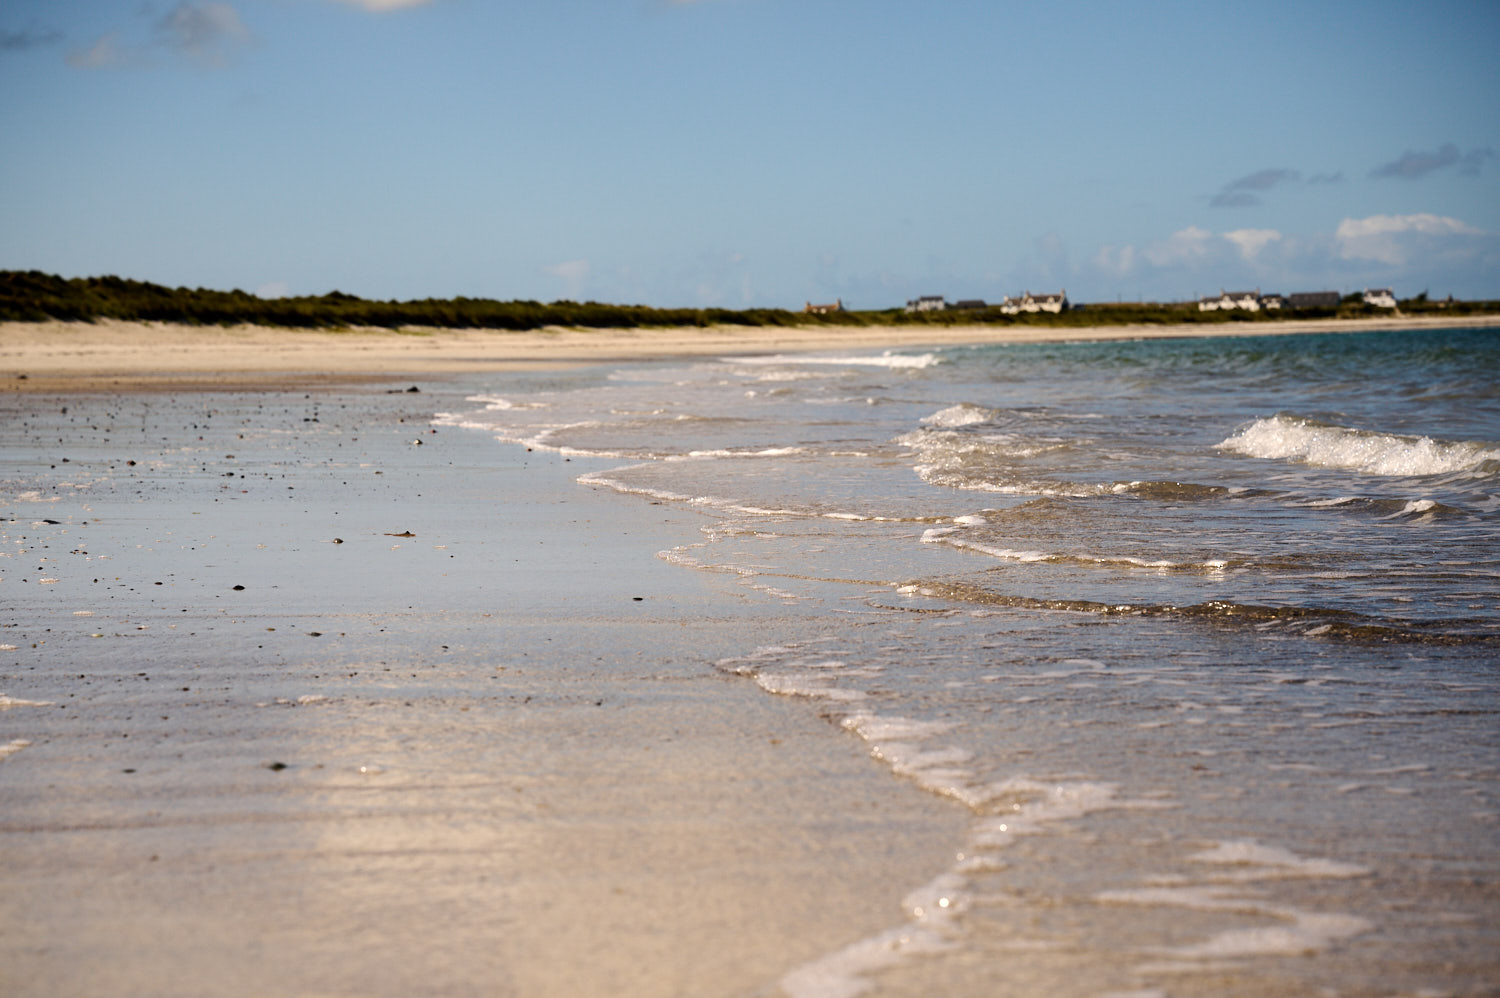 A walk on the beach in the Isle of Tiree.